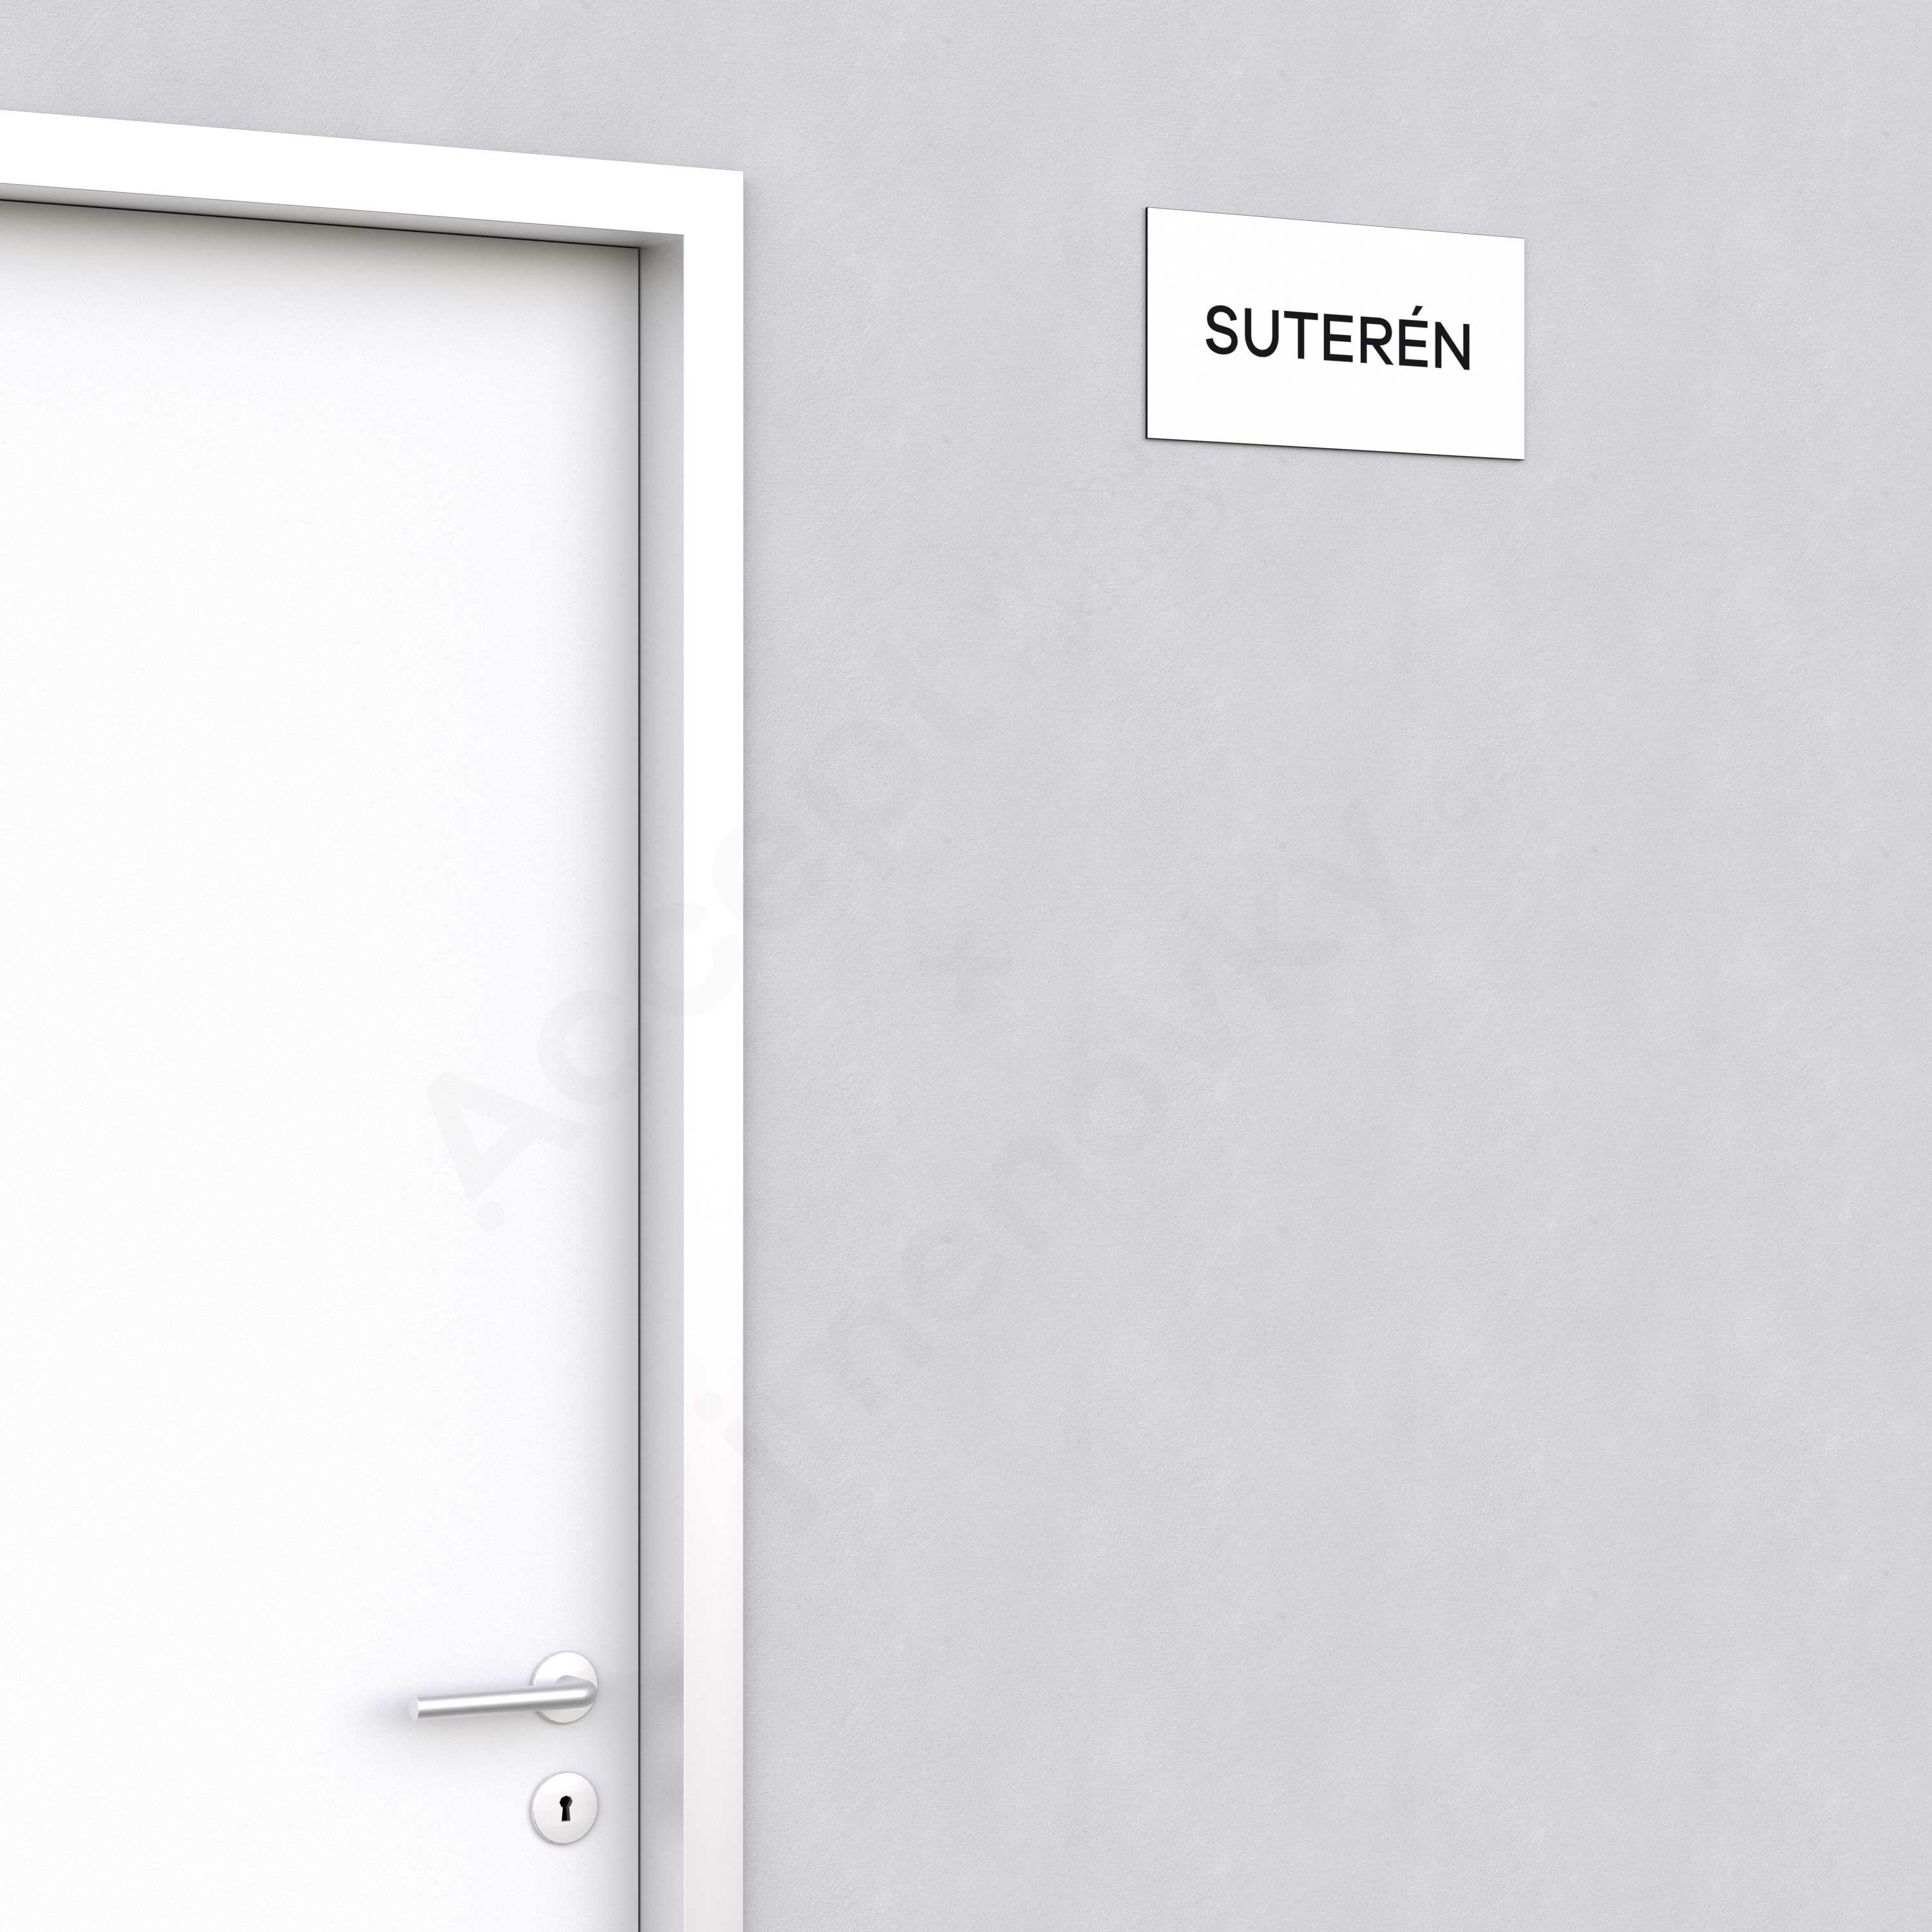 Označení podlaží "SUTERÉN" - bílá tabulka - černý popis - náhled